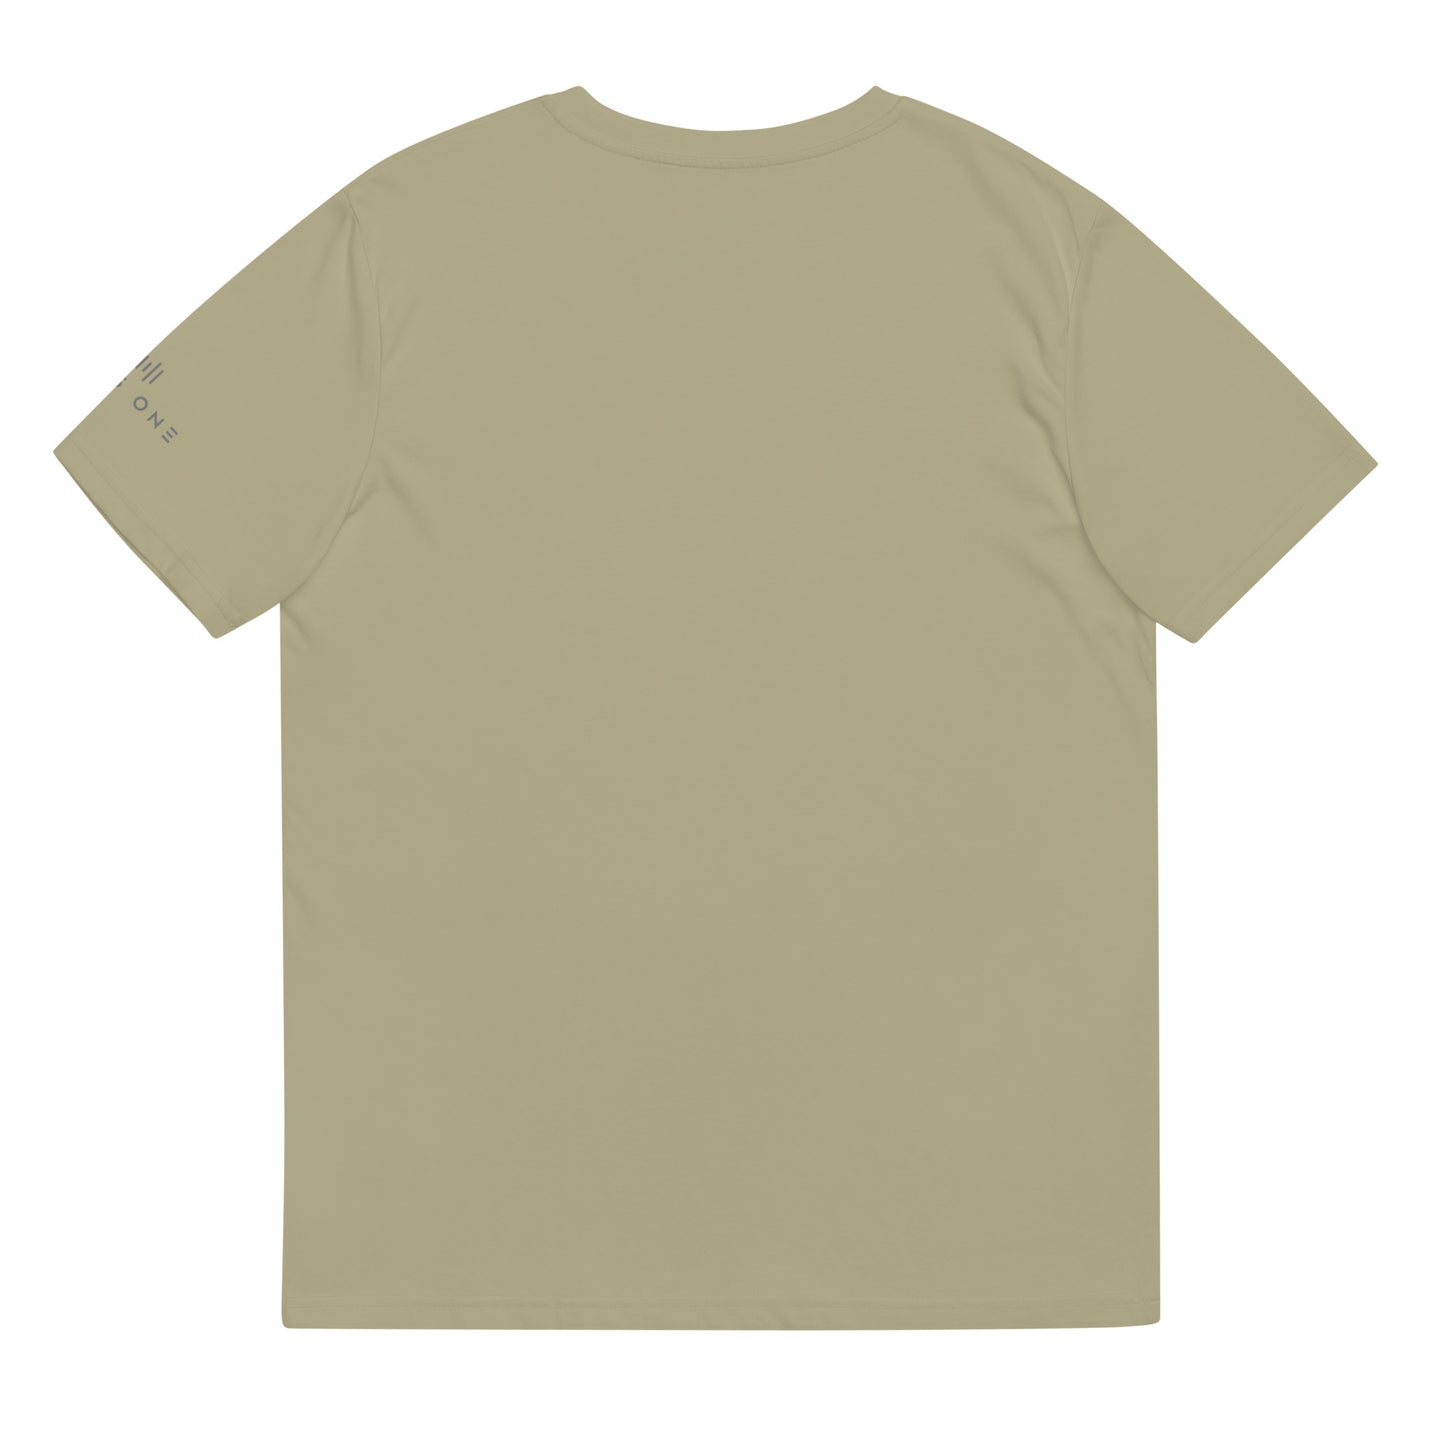 SK8 Kid (v2) Unisex organic cotton t-shirt